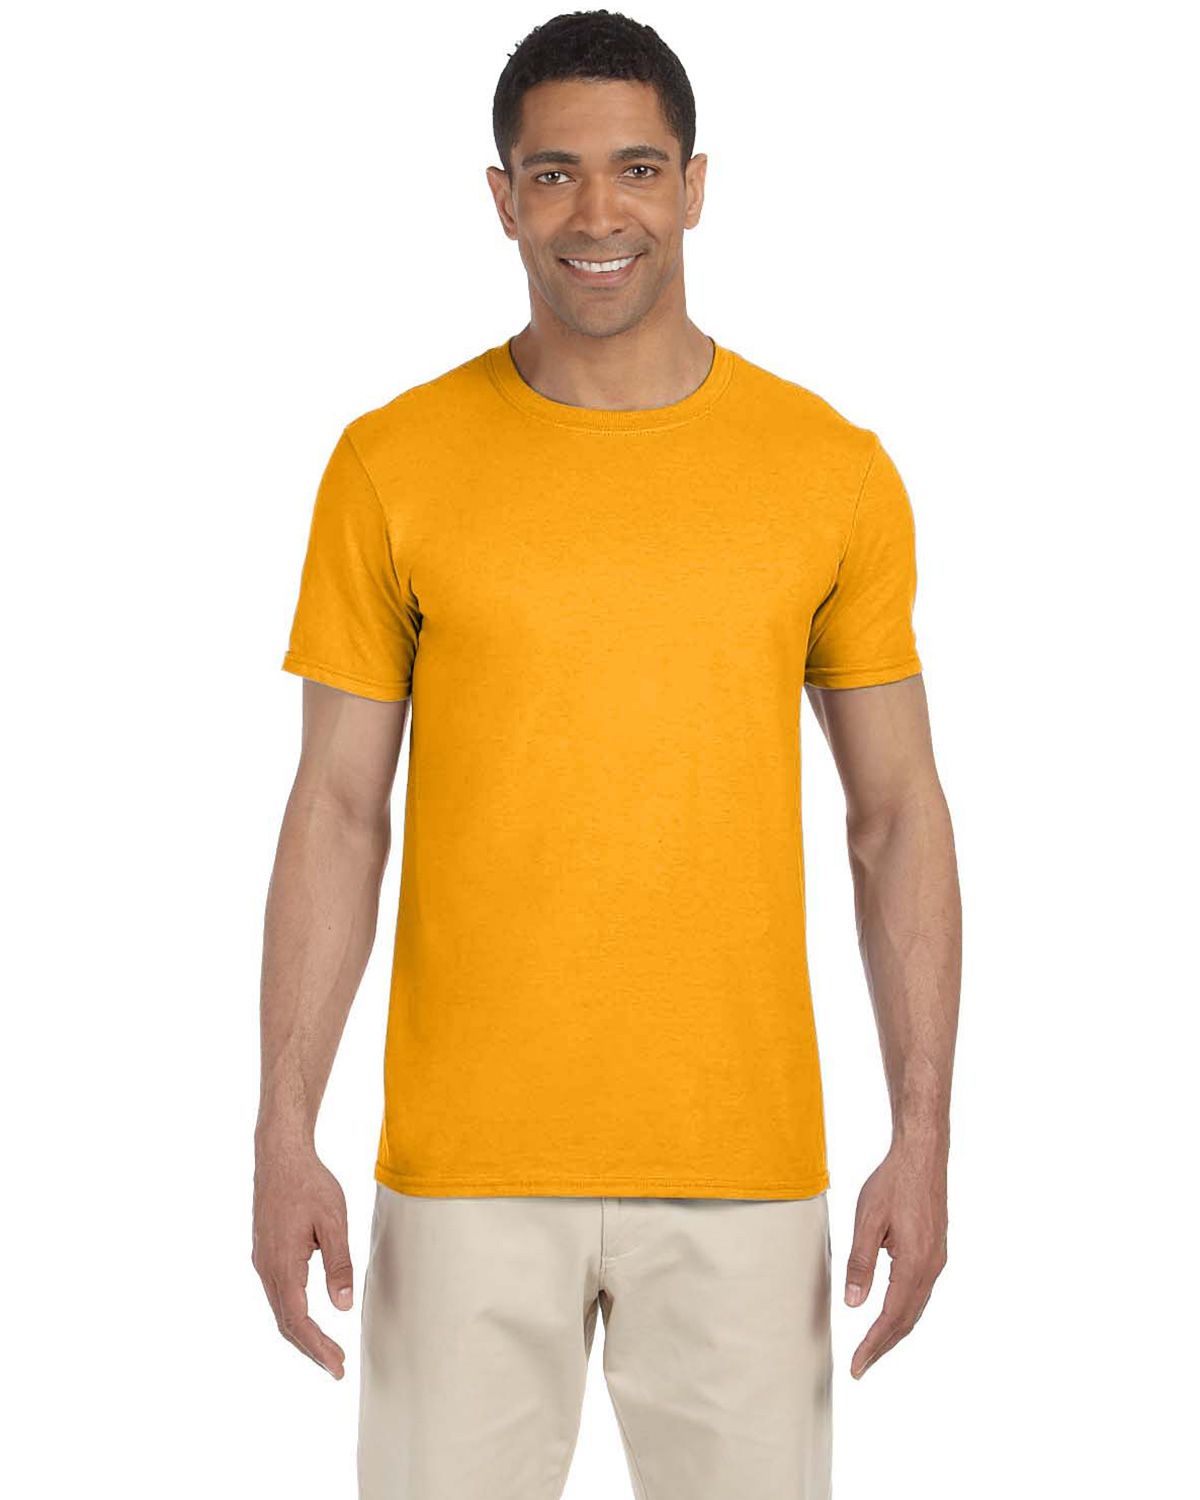 Gildan G640 Mens Soft Style T Shirt - Shop at ApparelnBags.com